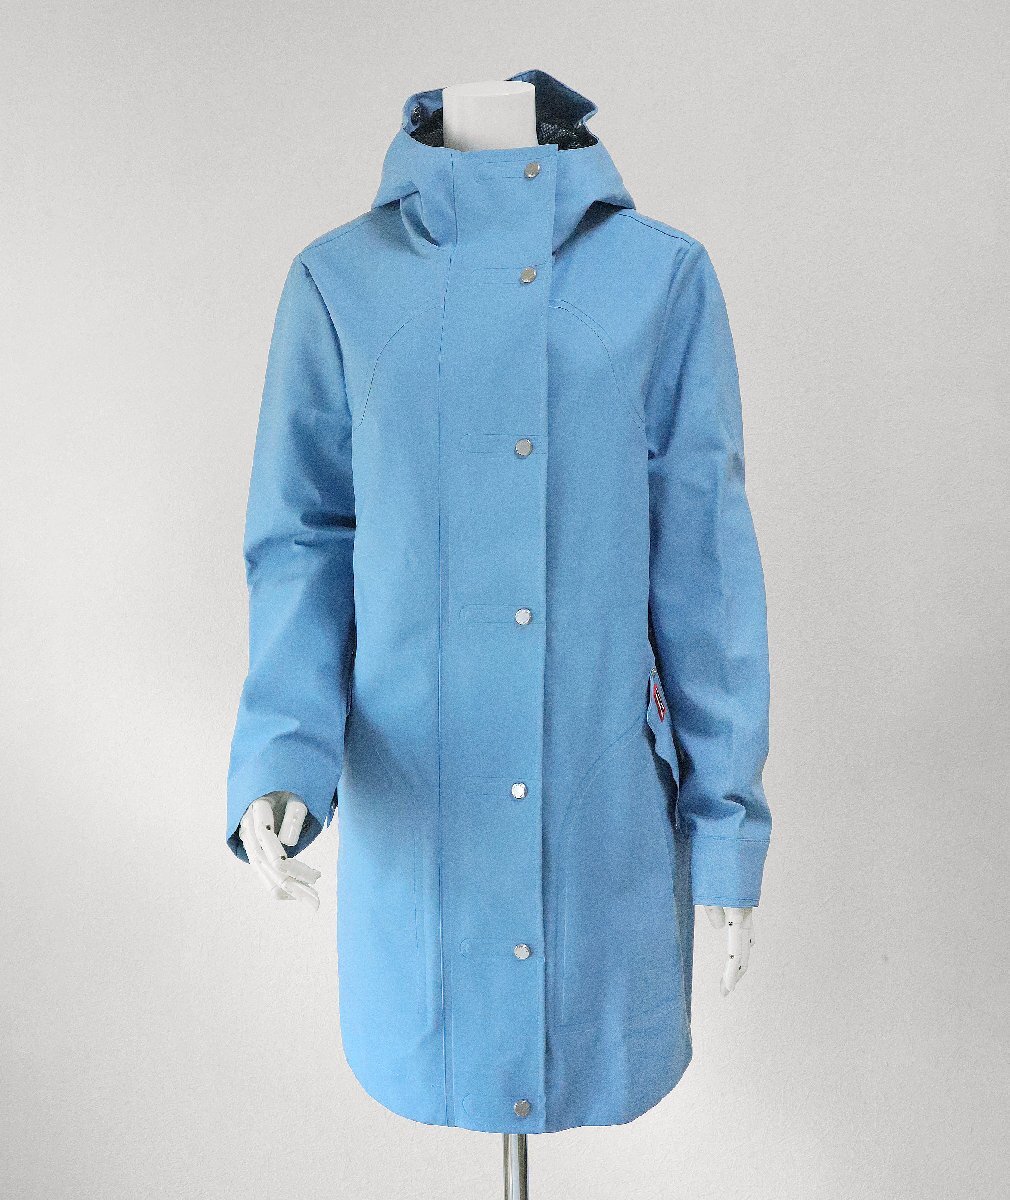 HUNTER * complete waterproof raincoat pale blue S size *W ORI R RUB HUNTING COAT* regular price 4.2 ten thousand jpy rainwear Kappa Hunter *HA16